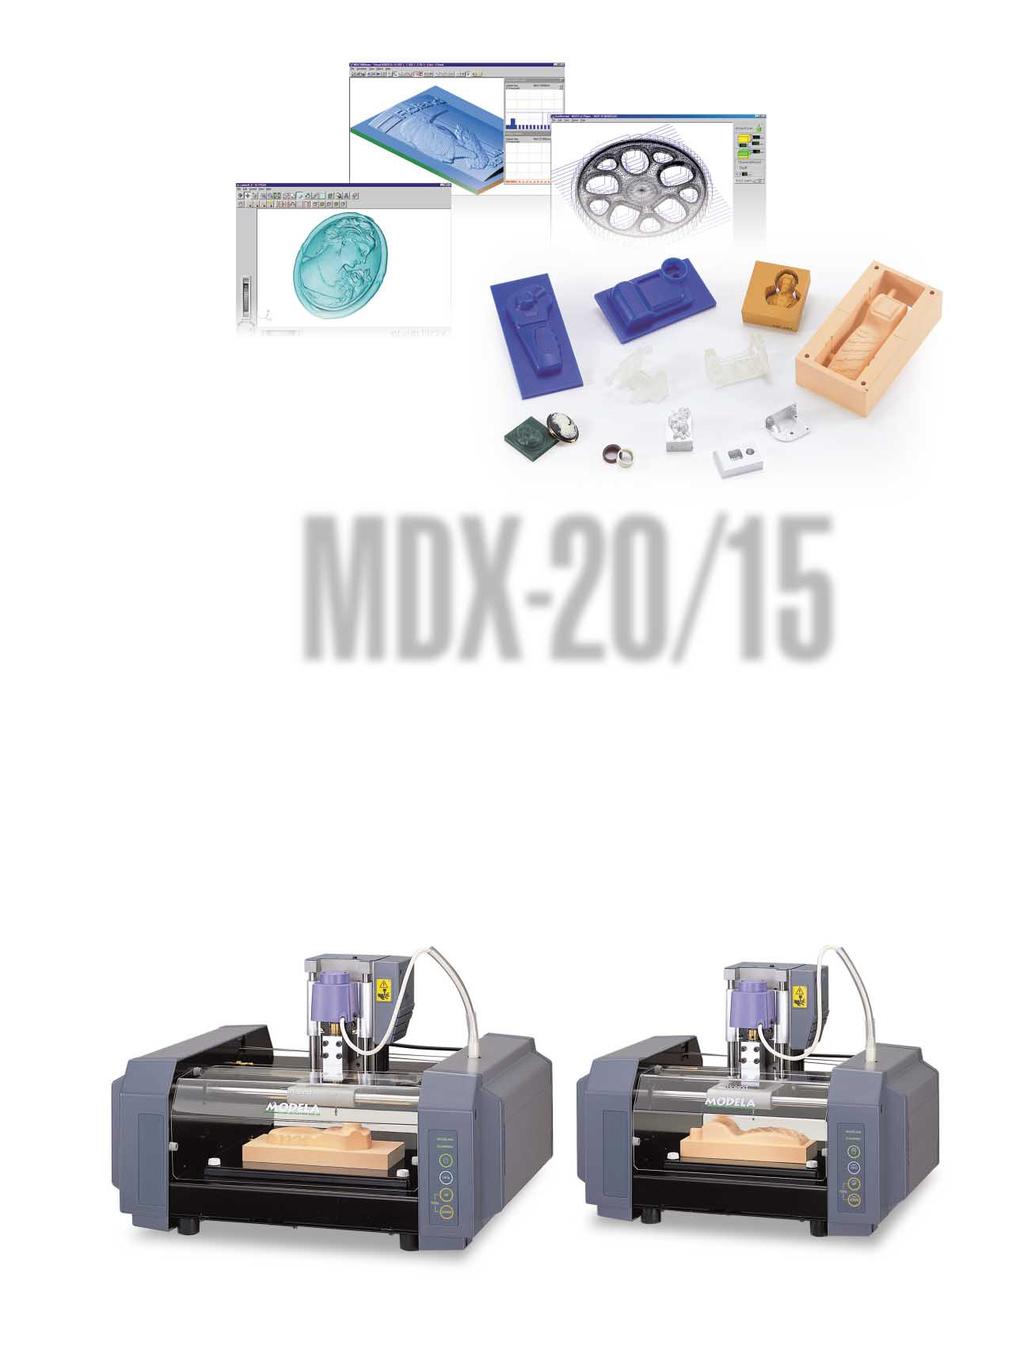 o d e l i n g & S c a n n i n g Model: Model: MDX-20 Max operation area : 203.2 mm (X) x 152.4 mm (Y) x 60.